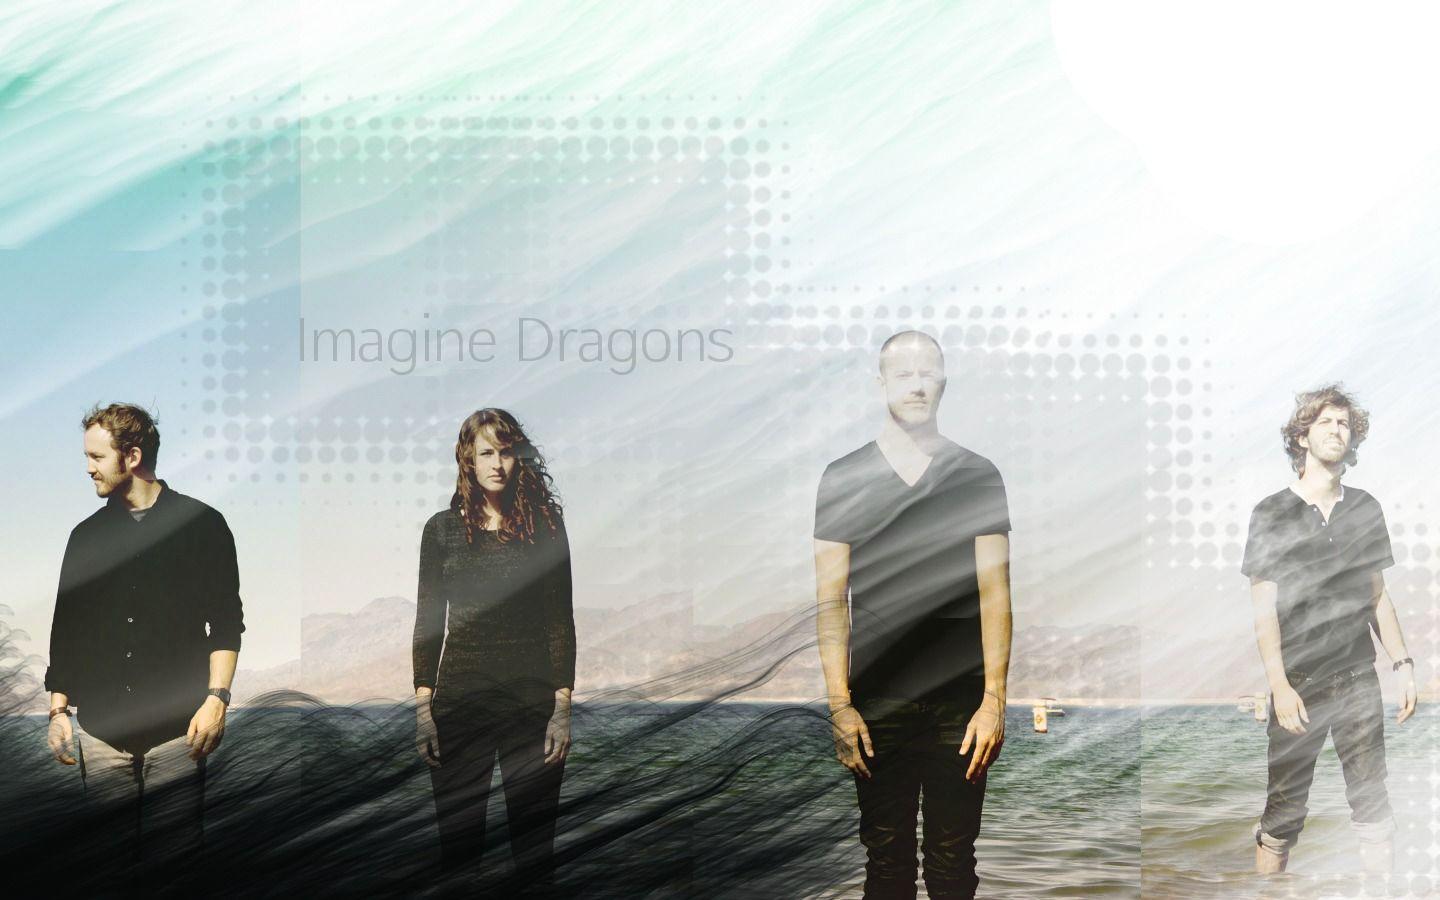 Imagine download. Imagine Dragons. Имеджин Драгонс арт. Imagine Dragons обои. Imagine Dragons фото группы.